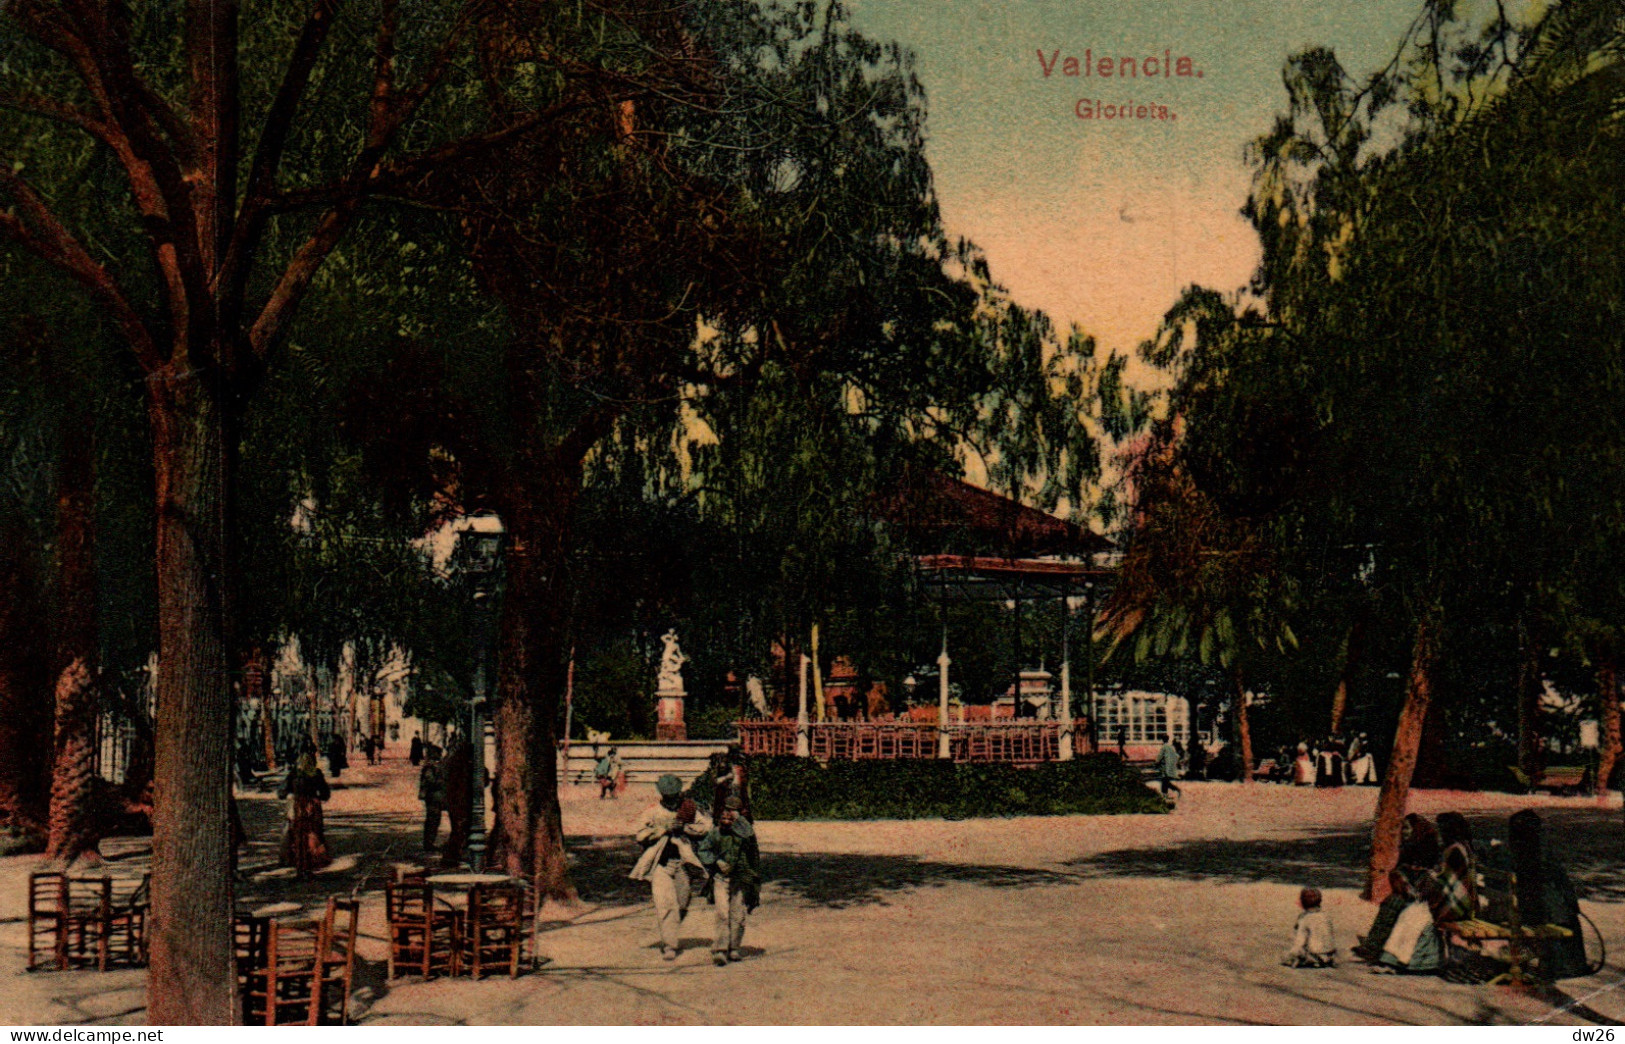 Valencia (Espagne) Jardin De La Glorieta, Quiosco (le Kiosque) - Valencia